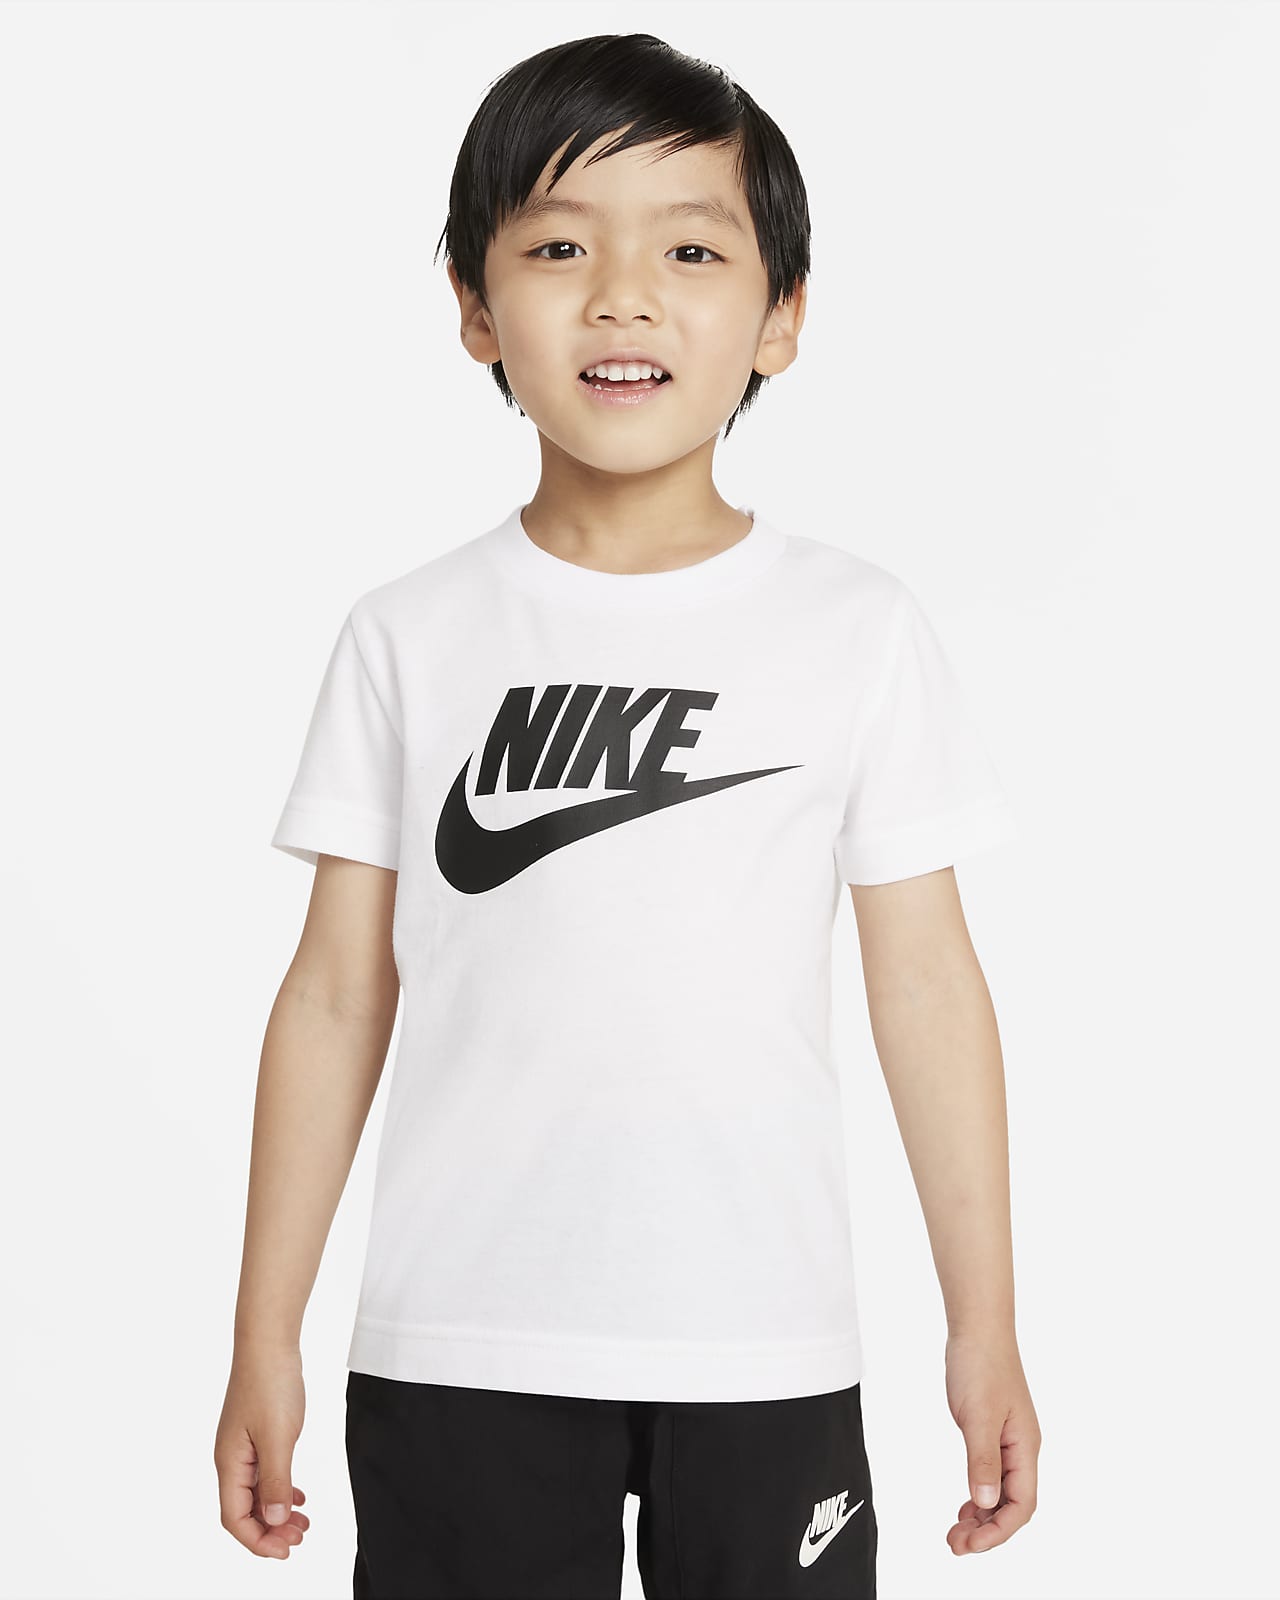 Nike-T-shirt til småbørn. DK